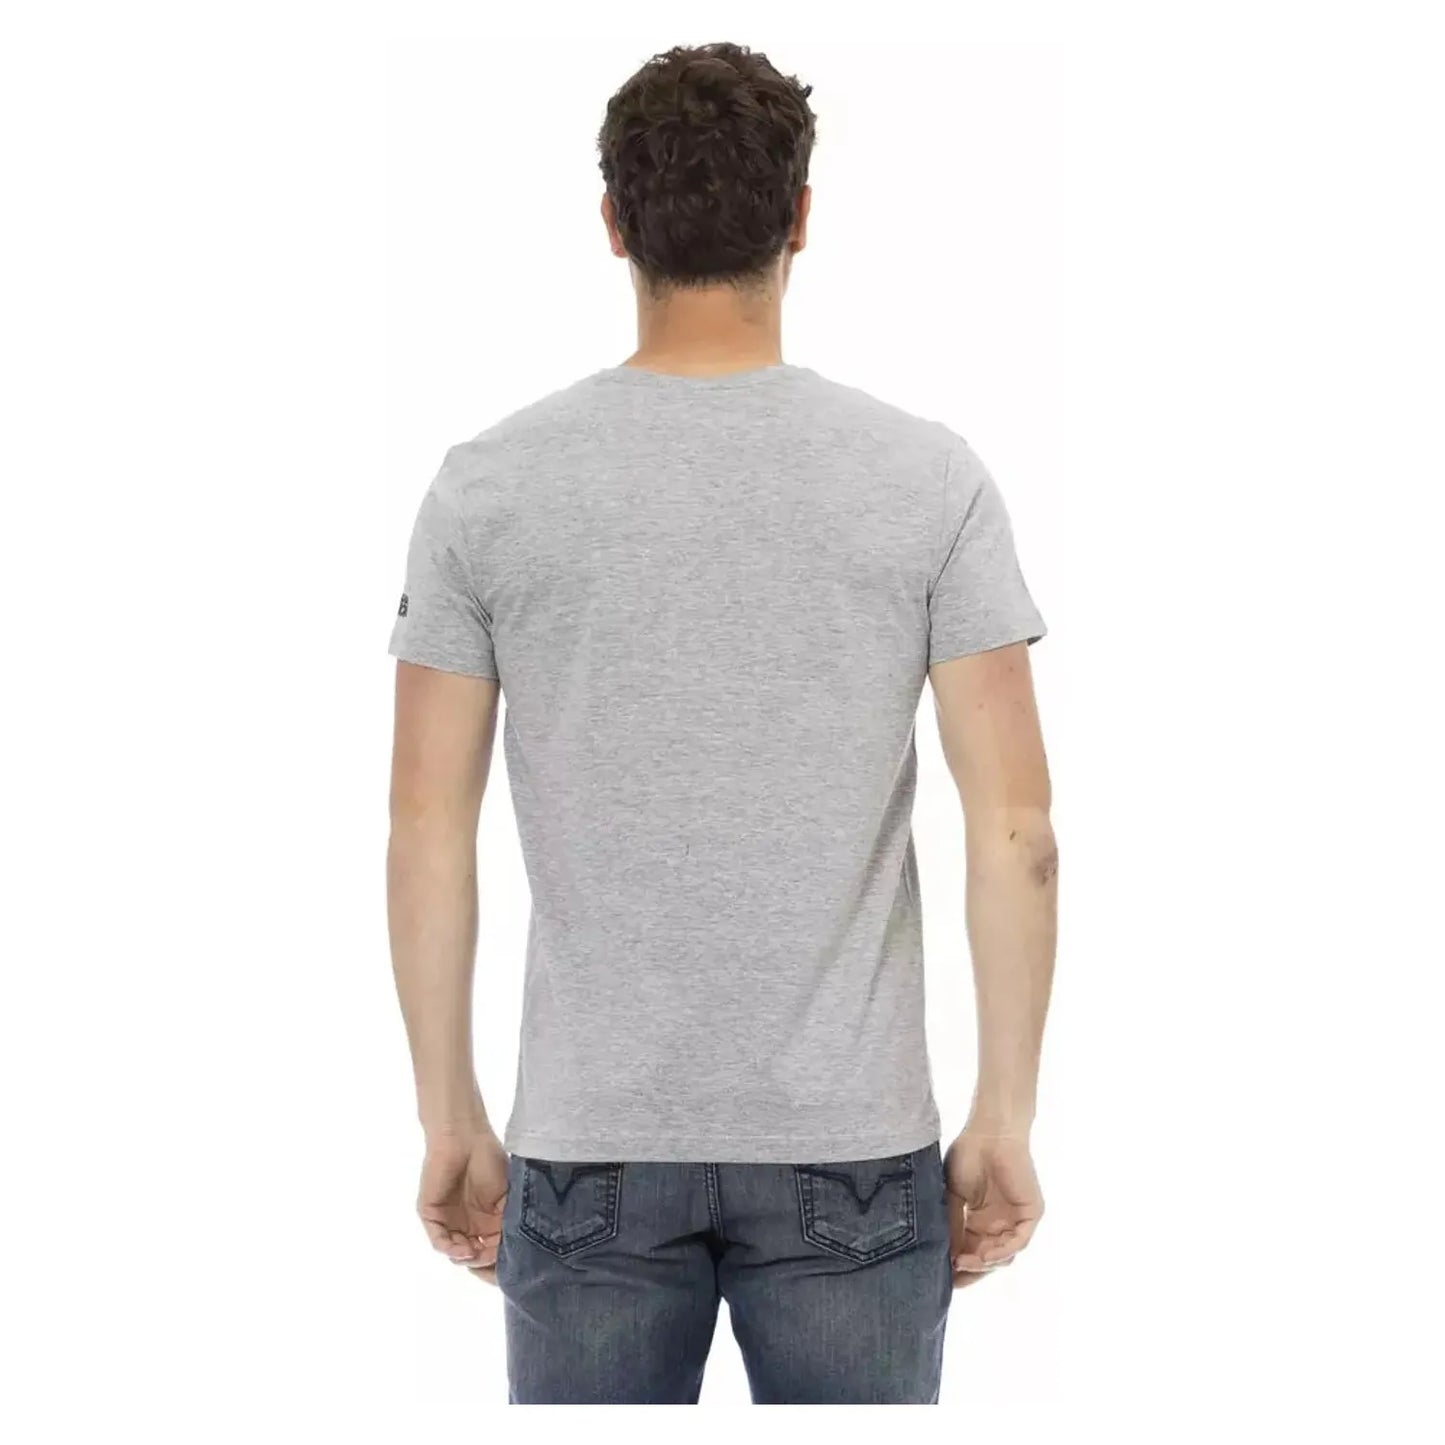 Trussardi Action Sleek Summer Gray T-Shirt with Front Print gray-cotton-t-shirt-80